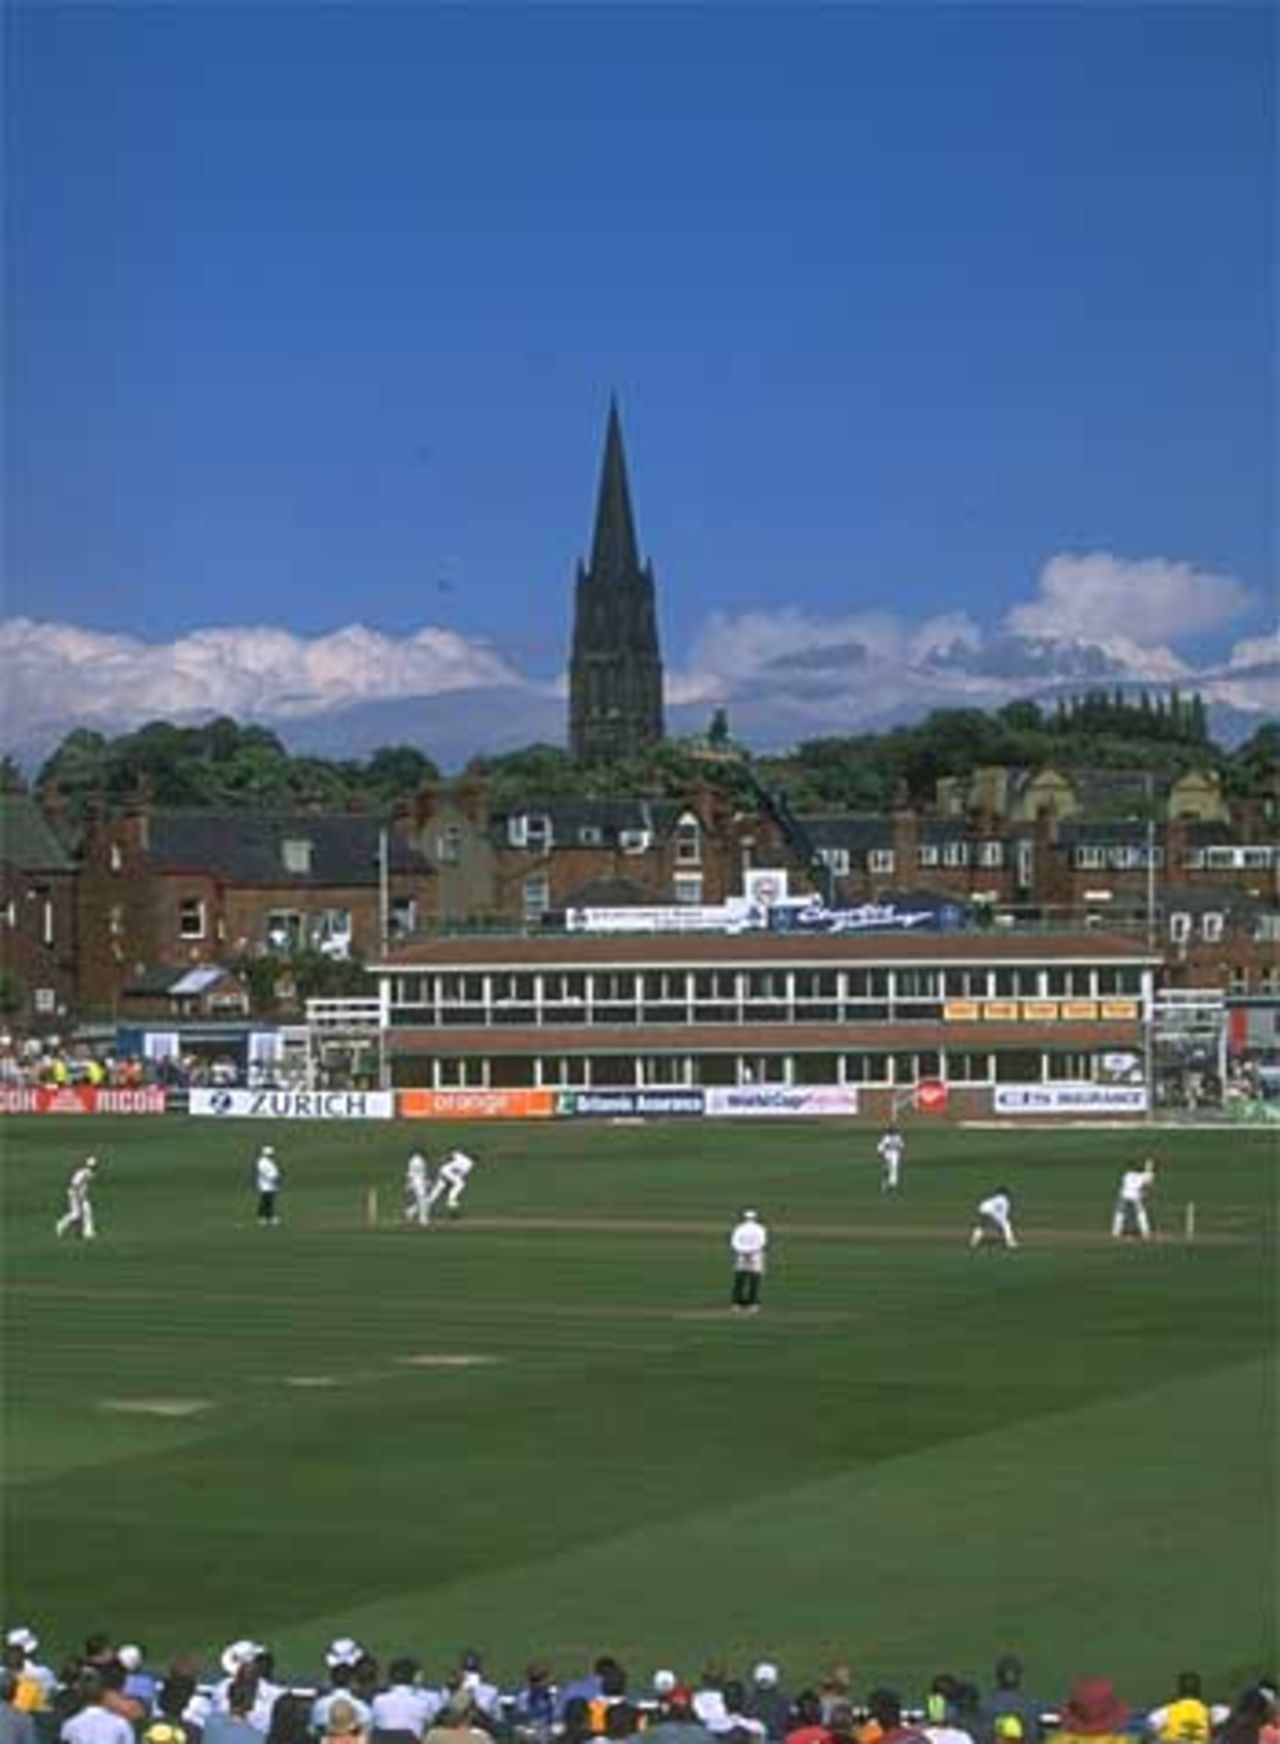 Headingley, Leeds in 2001